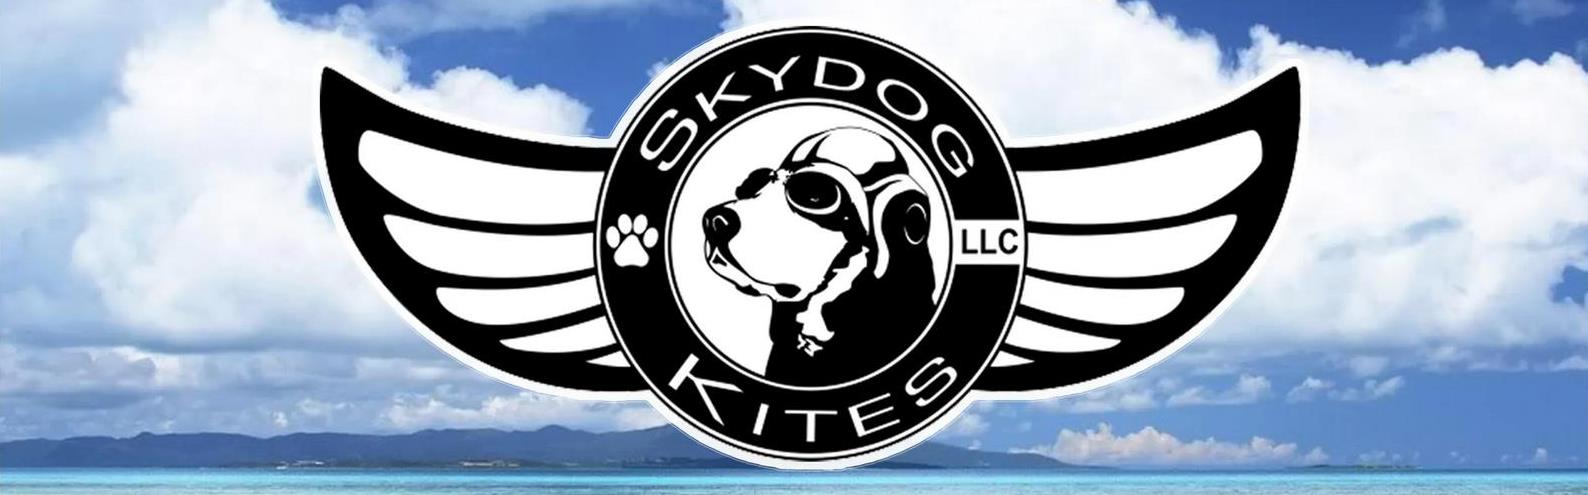 Skydog Kites Brand